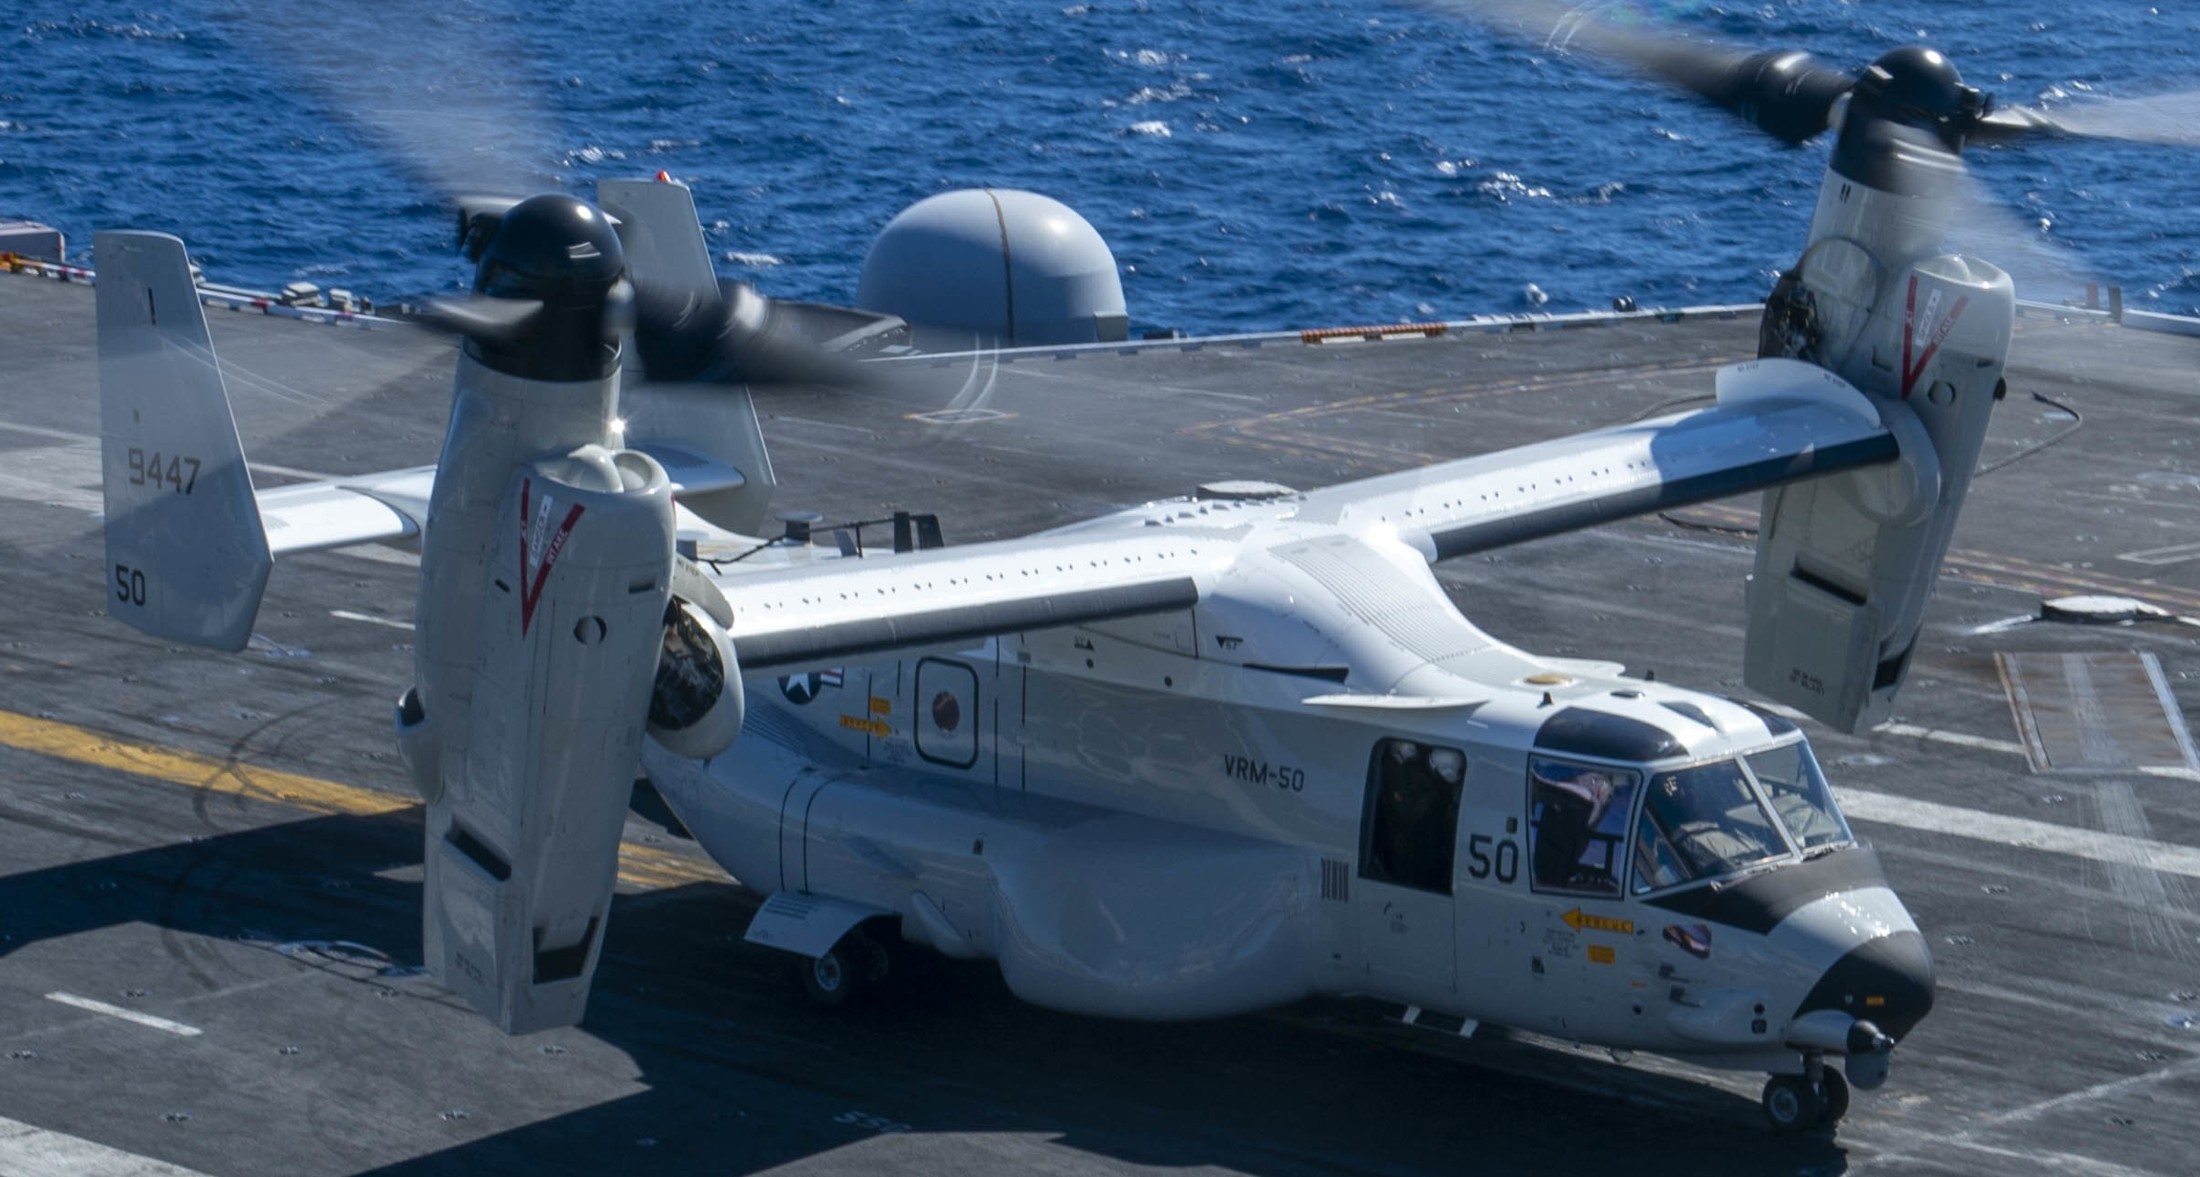 vrm-50 sun hawks fleet logistics multi mission squadron us navy bell boeing cmv-22b osprey replacement frs 13